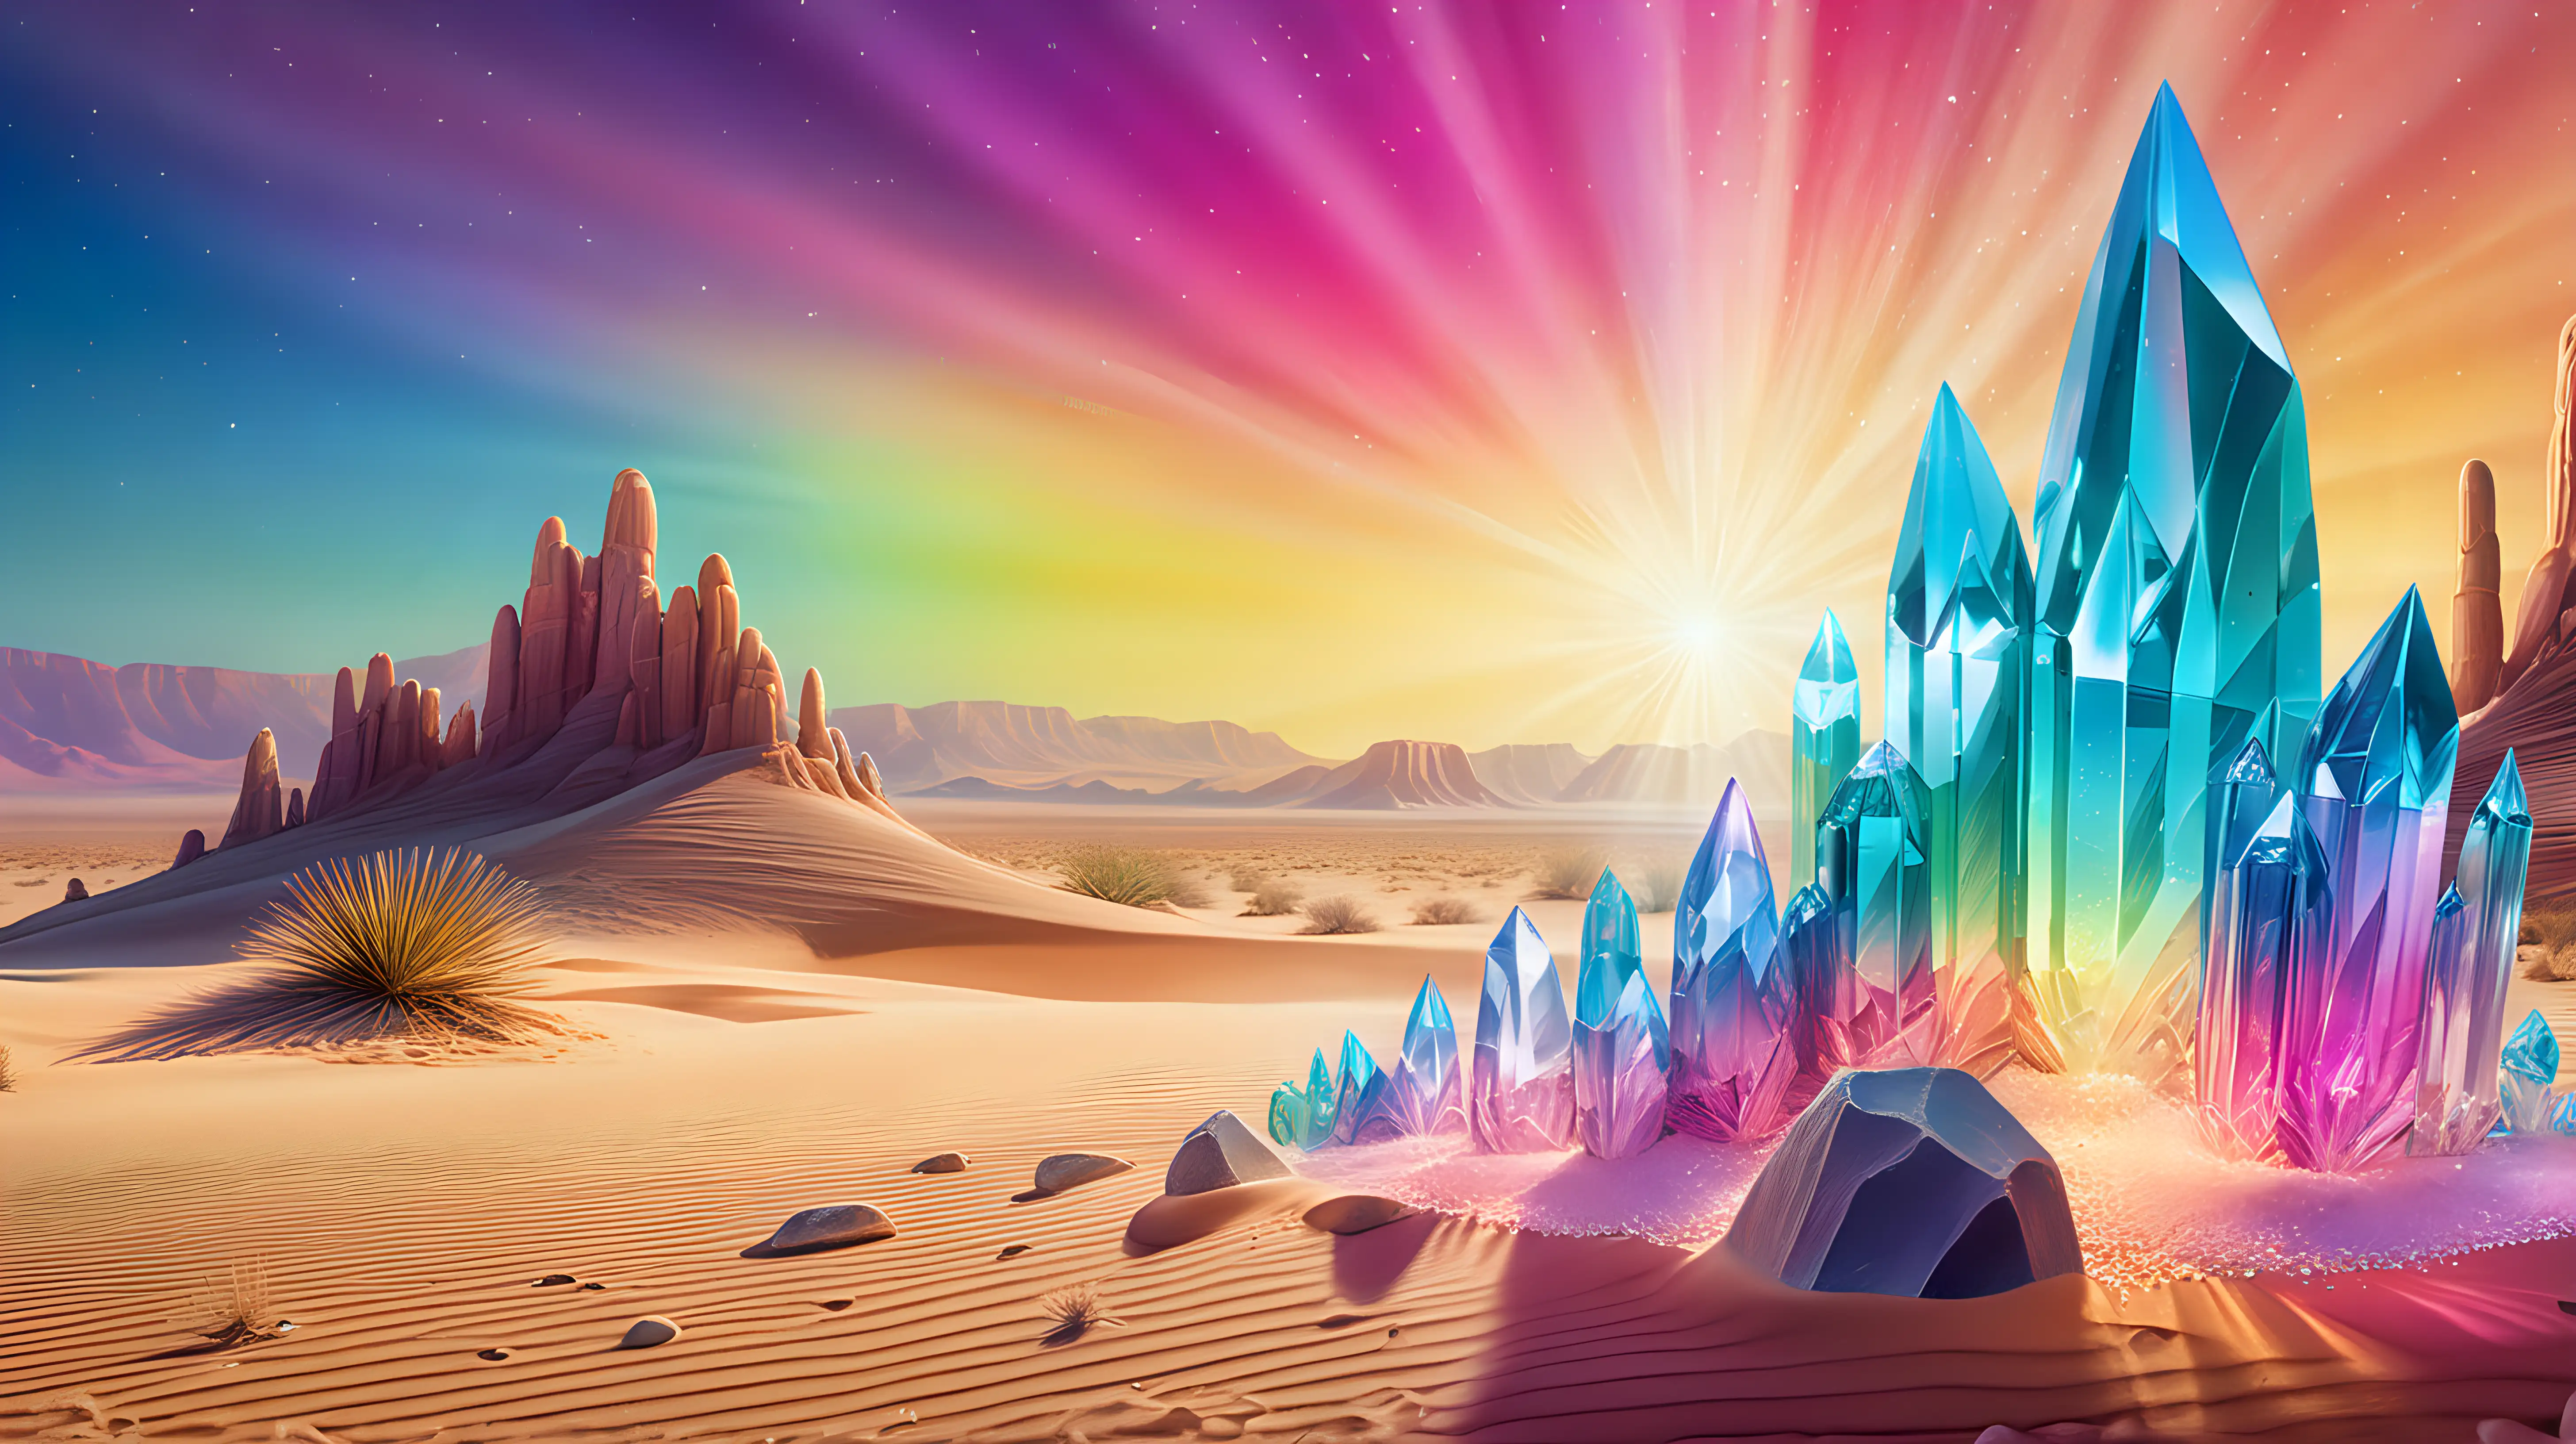 Enchanting Desert Landscape with Luminous Crystals